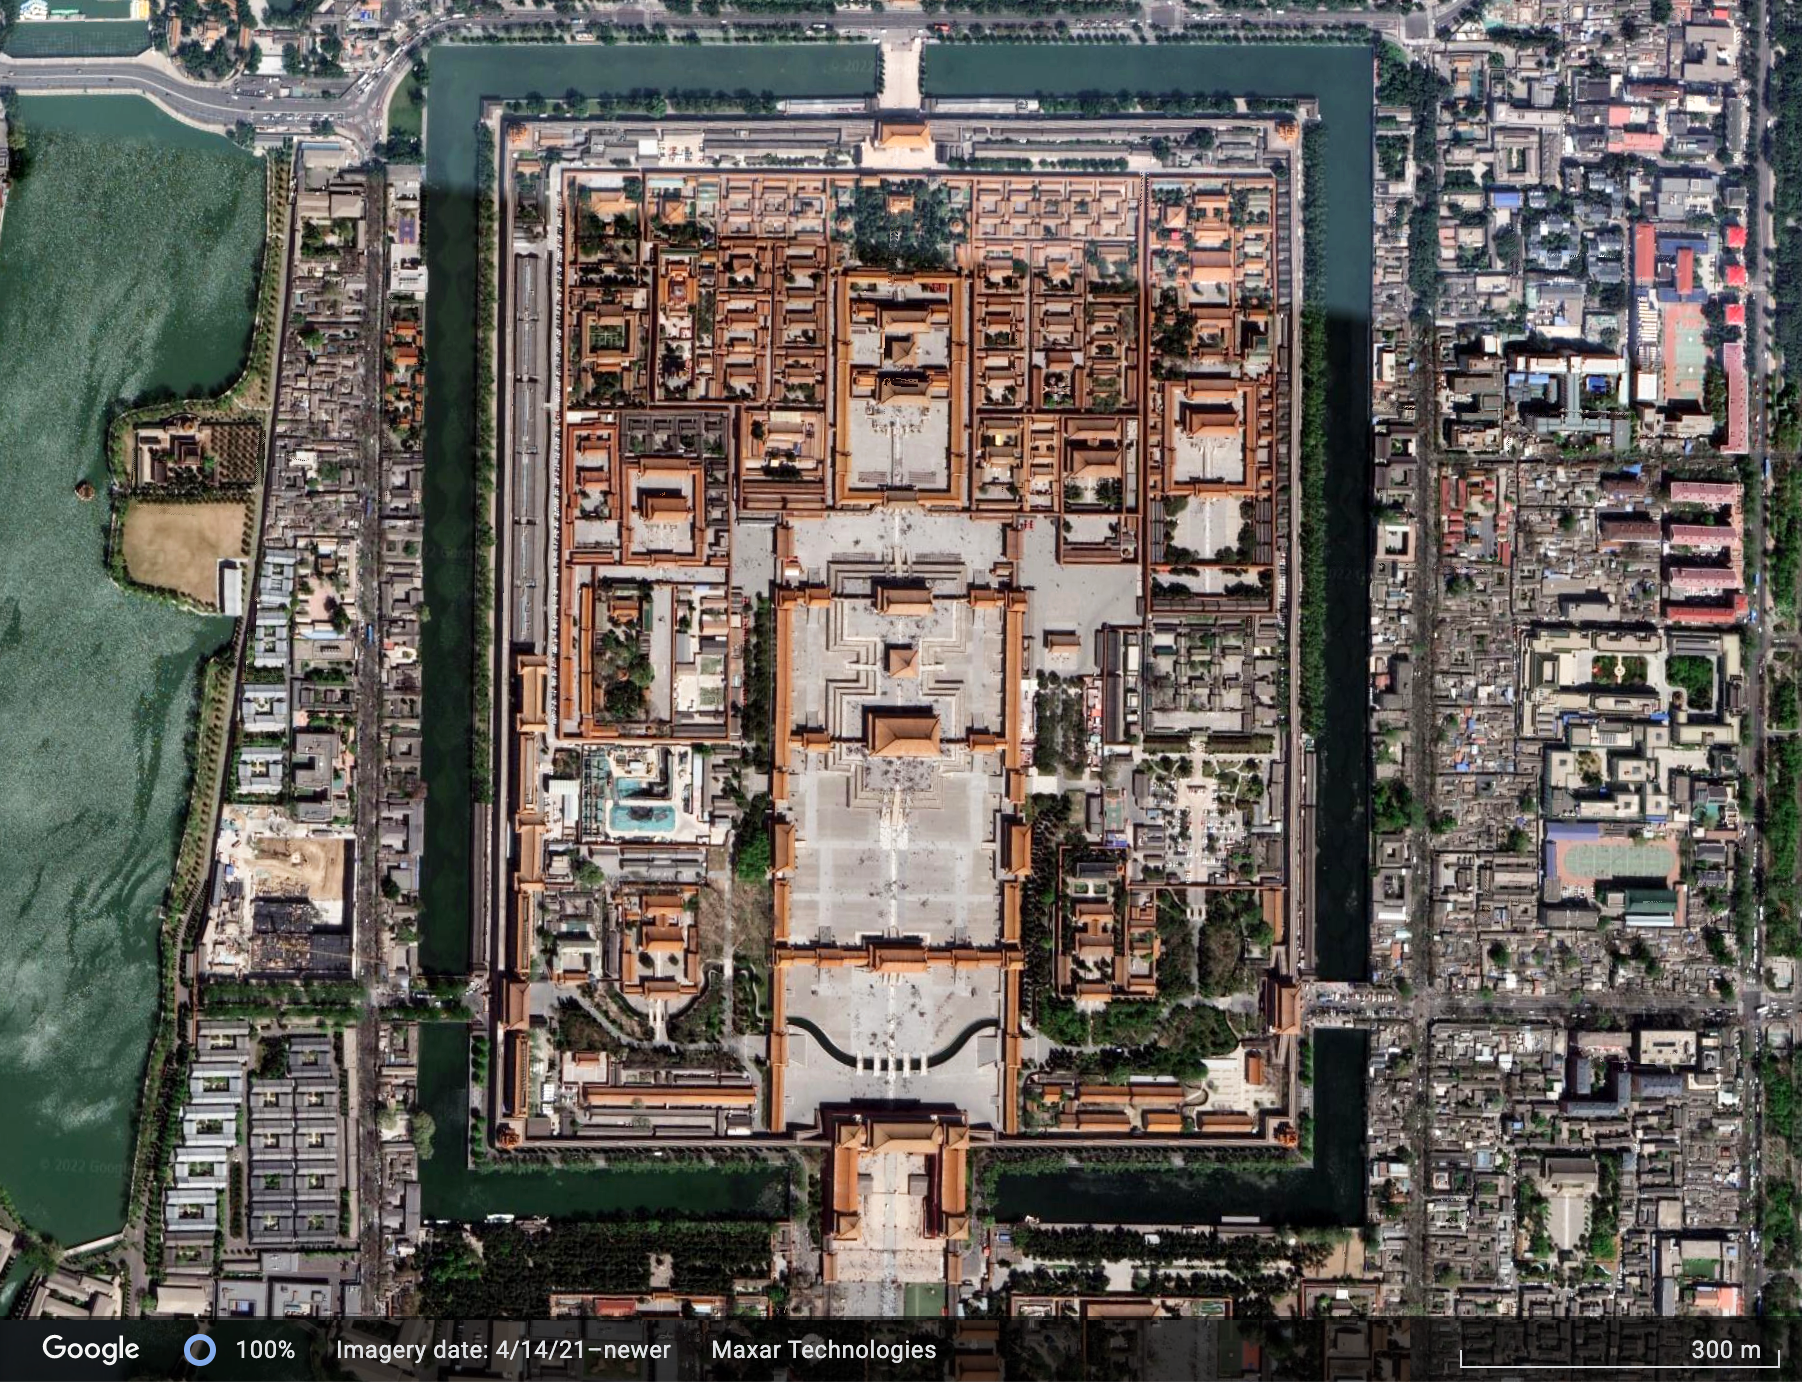 forbidden city beijing plan